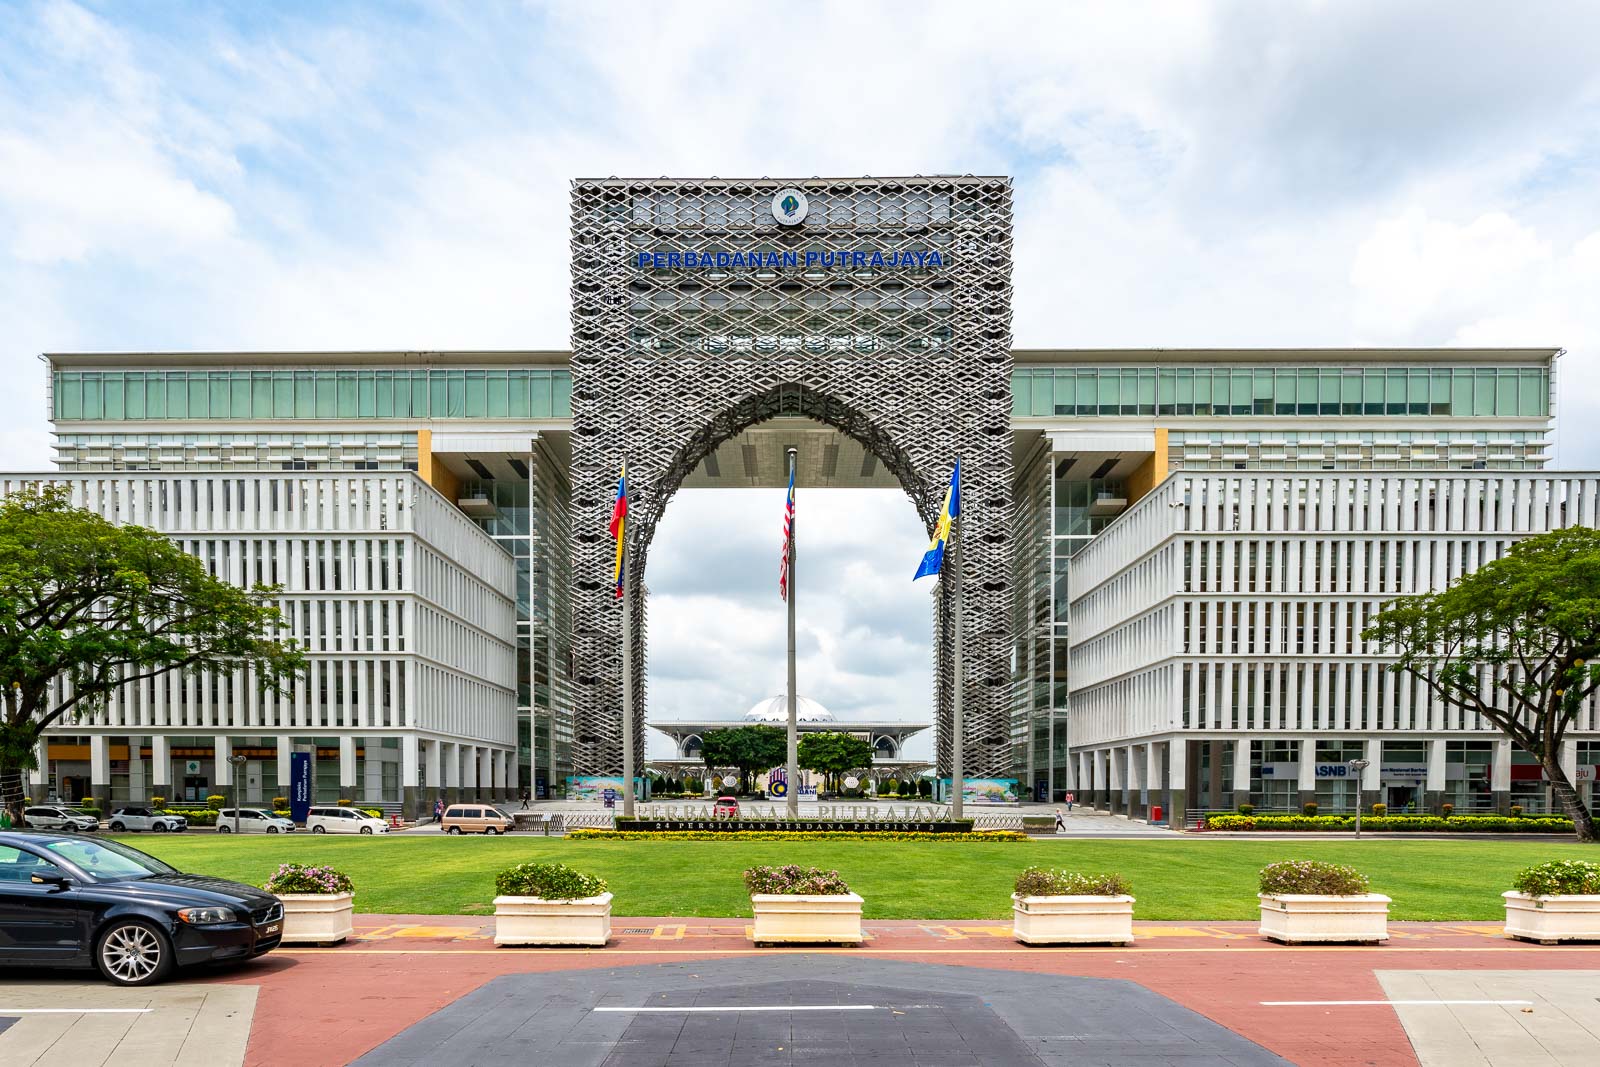 Perbadanan Putrajaya Complex, Putrajaya